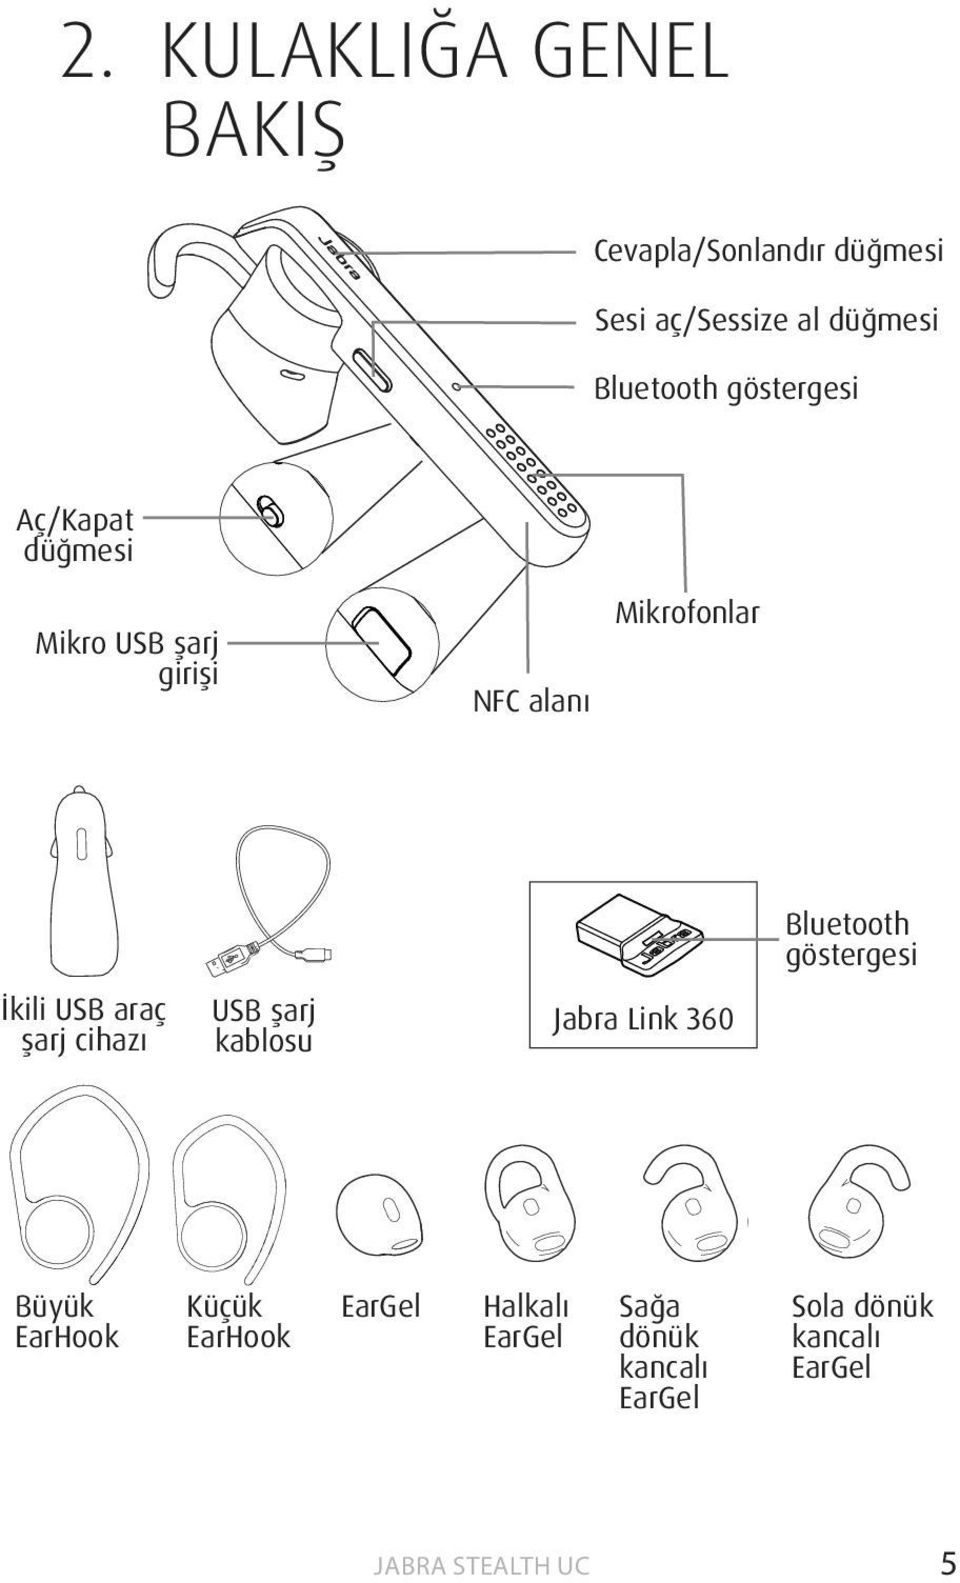 Bluetooth göstergesi İkili USB araç şarj cihazı USB şarj kablosu Jabra Link 360 Büyük